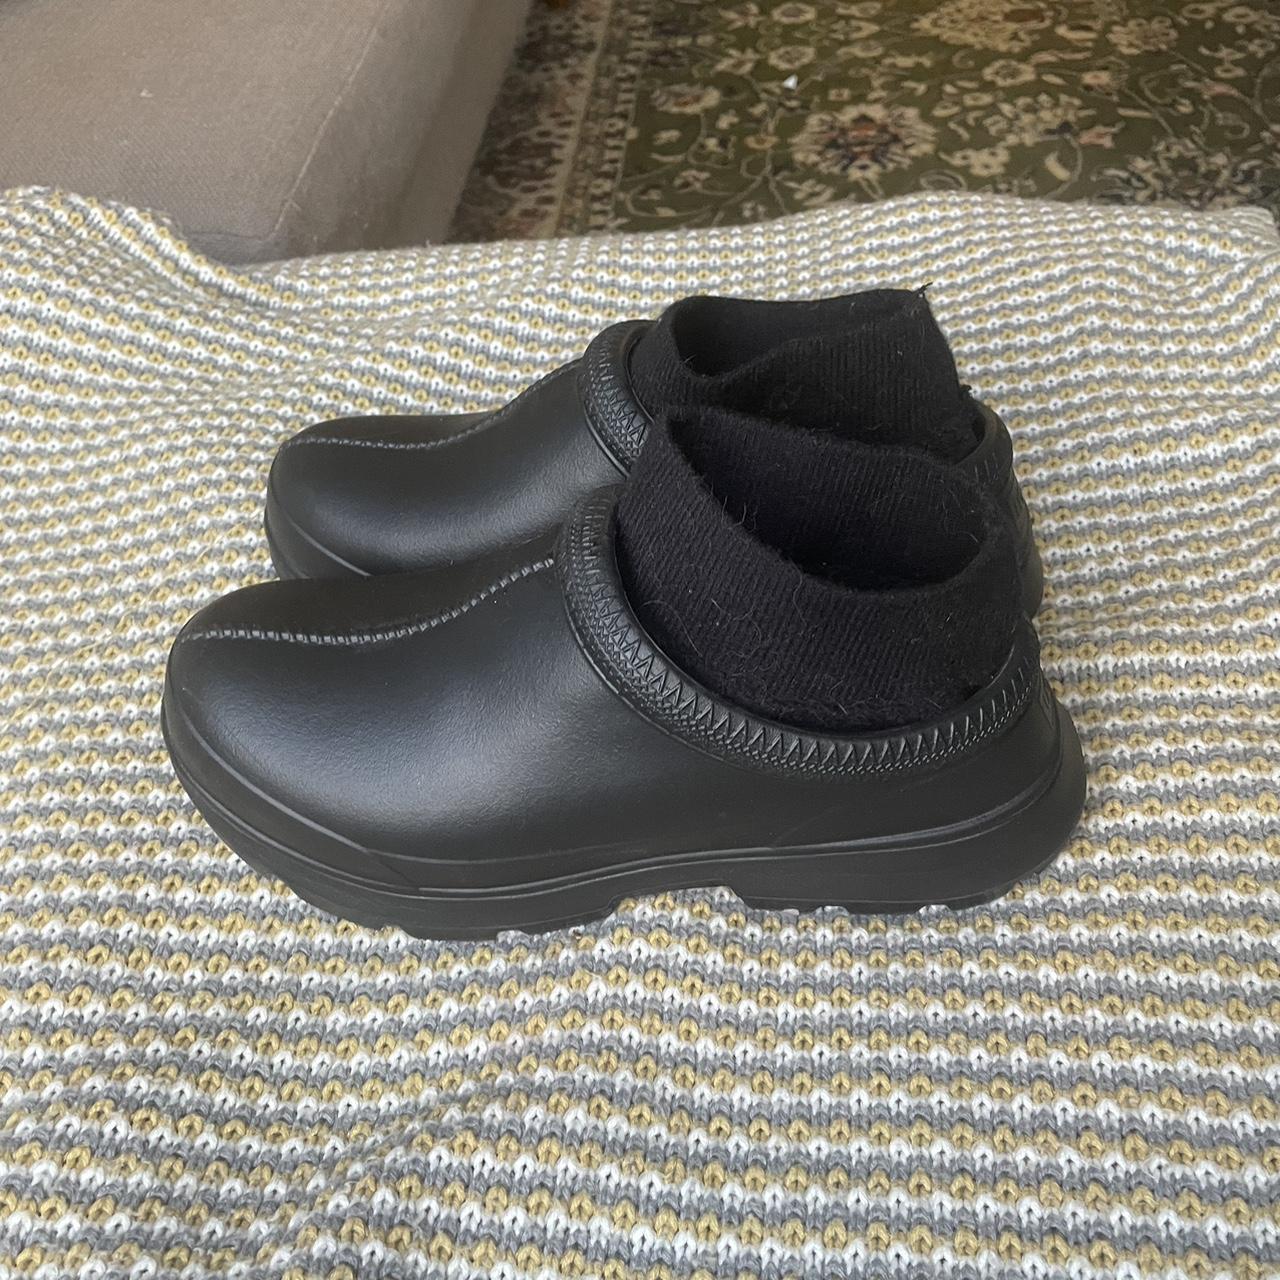 UGG Tasman X rain boot in black size 10! These look... - Depop